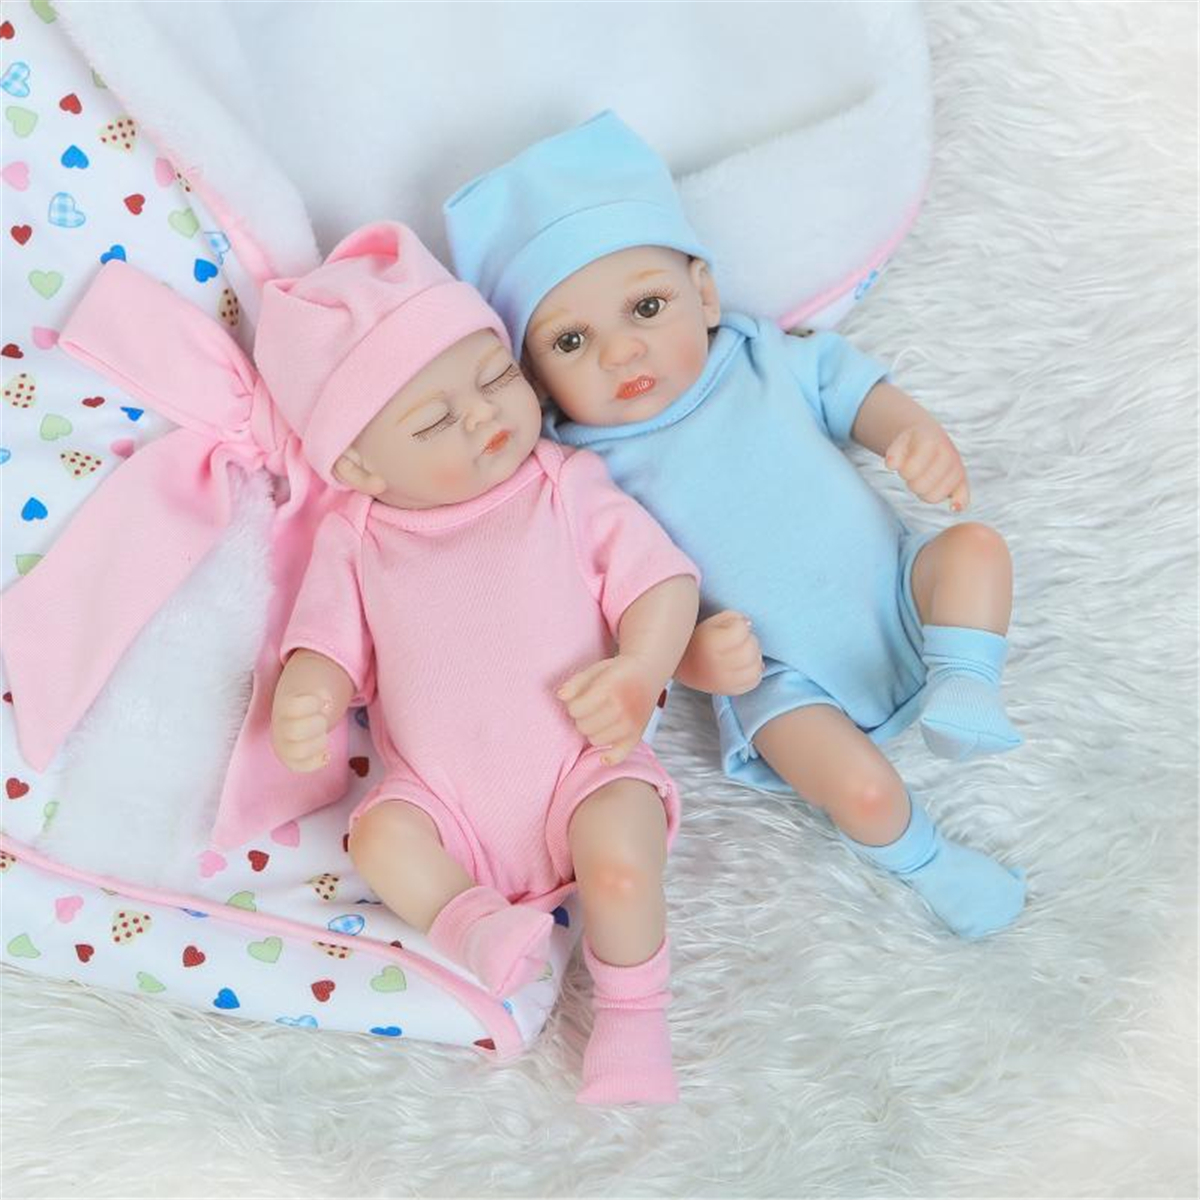 24SHOPZ NPK 10 Inch 26cm Newborns Reborn Baby Soft Silicone Doll Handmade Lifelike Baby Girl Dolls